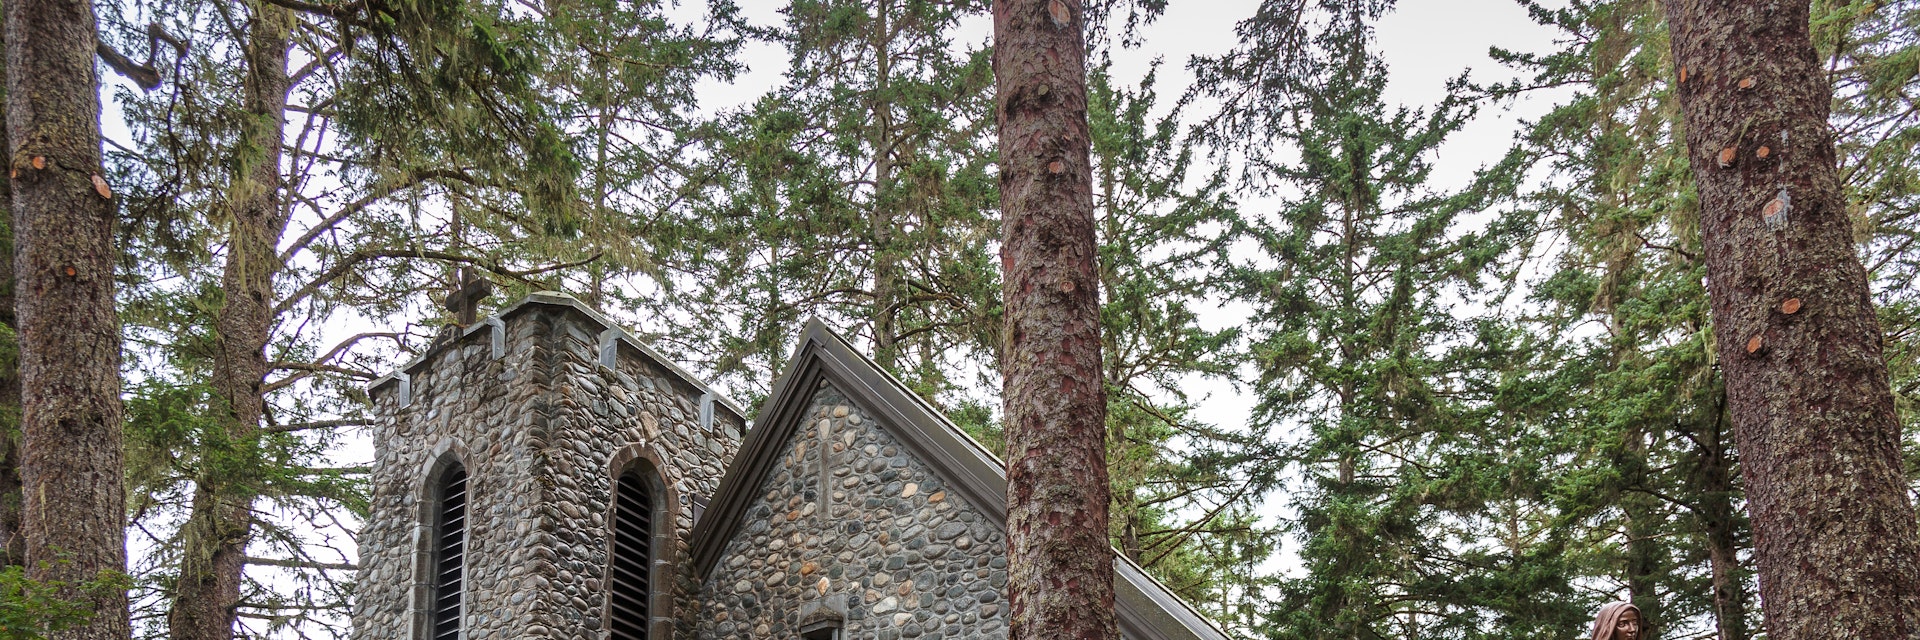 The Shrine of St Thérèse church near Juneau, Alaska.